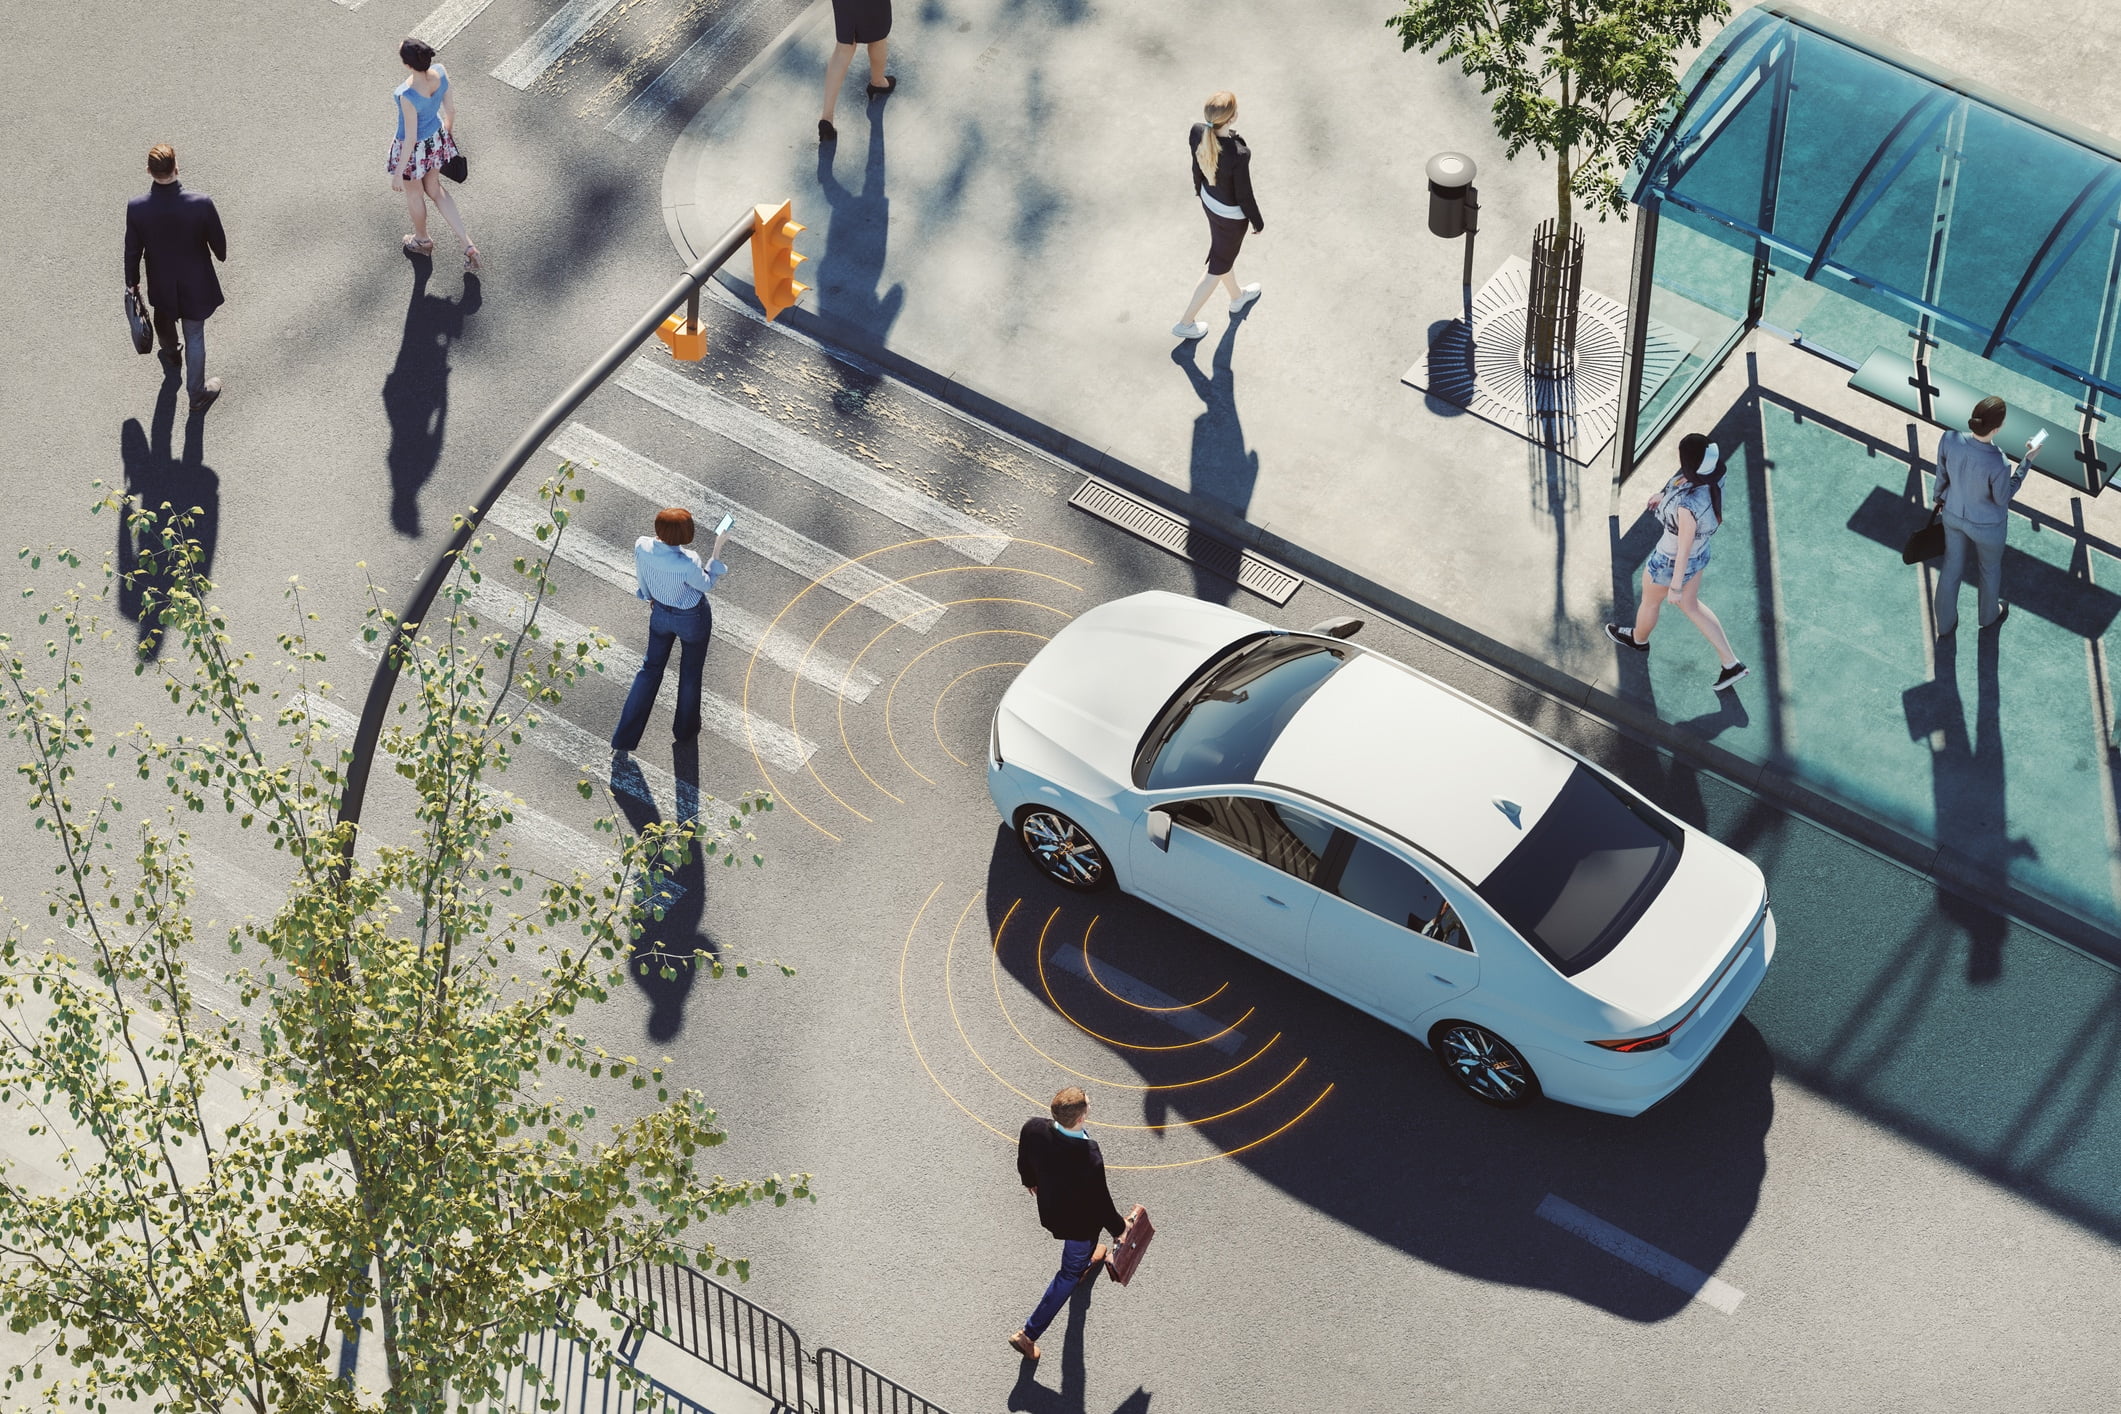 What if an autonomous vehicle hits a pedestrian?